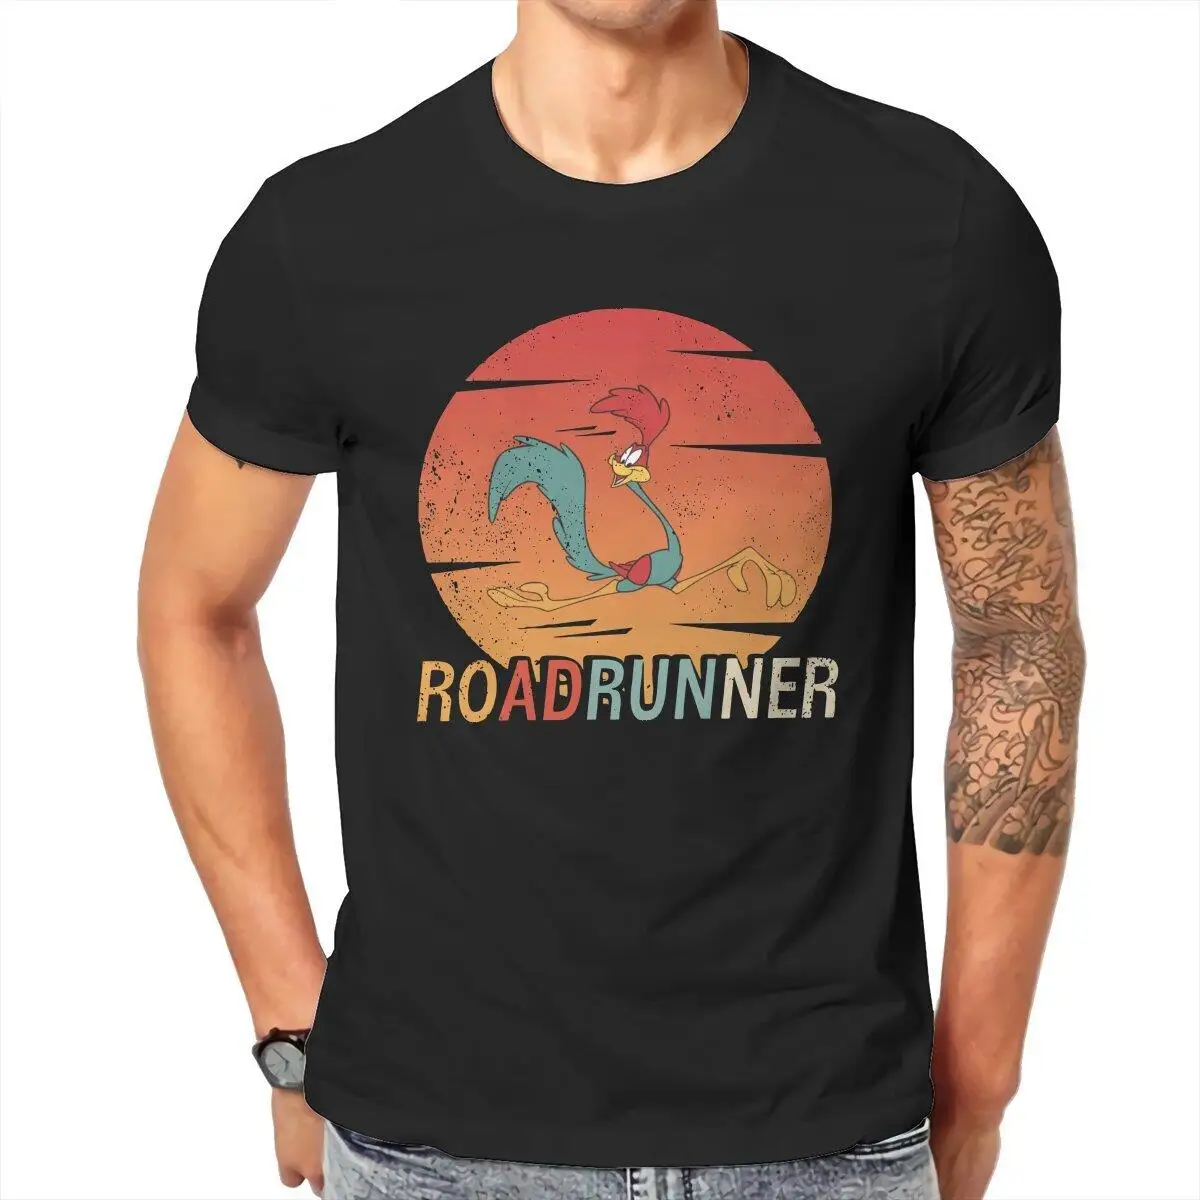 Amazing Vintage Retro Roadrunner Silhouette T-Shirts Men O Neck 100% Cotton T Shirts  Short Sleeve Tee Shirt Gift Idea Clothes